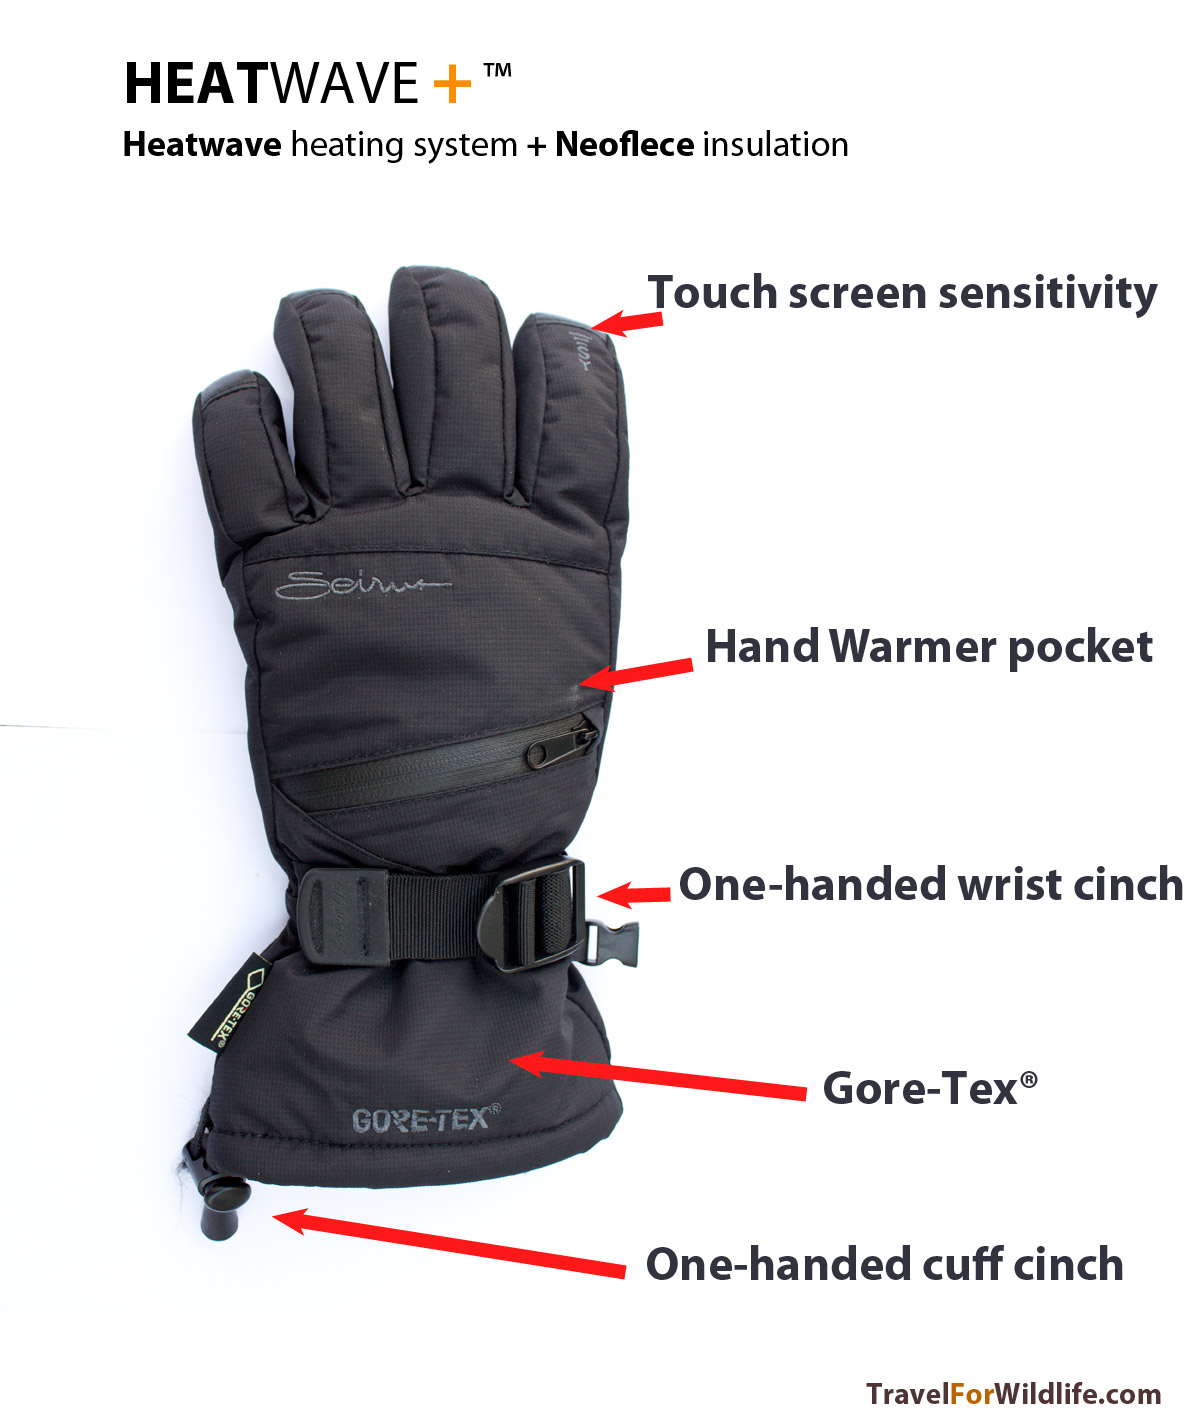 Manifesteren Eerlijk oorsprong Best Extreme Cold Weather Gloves for Adventurers | Travel For Wildlife